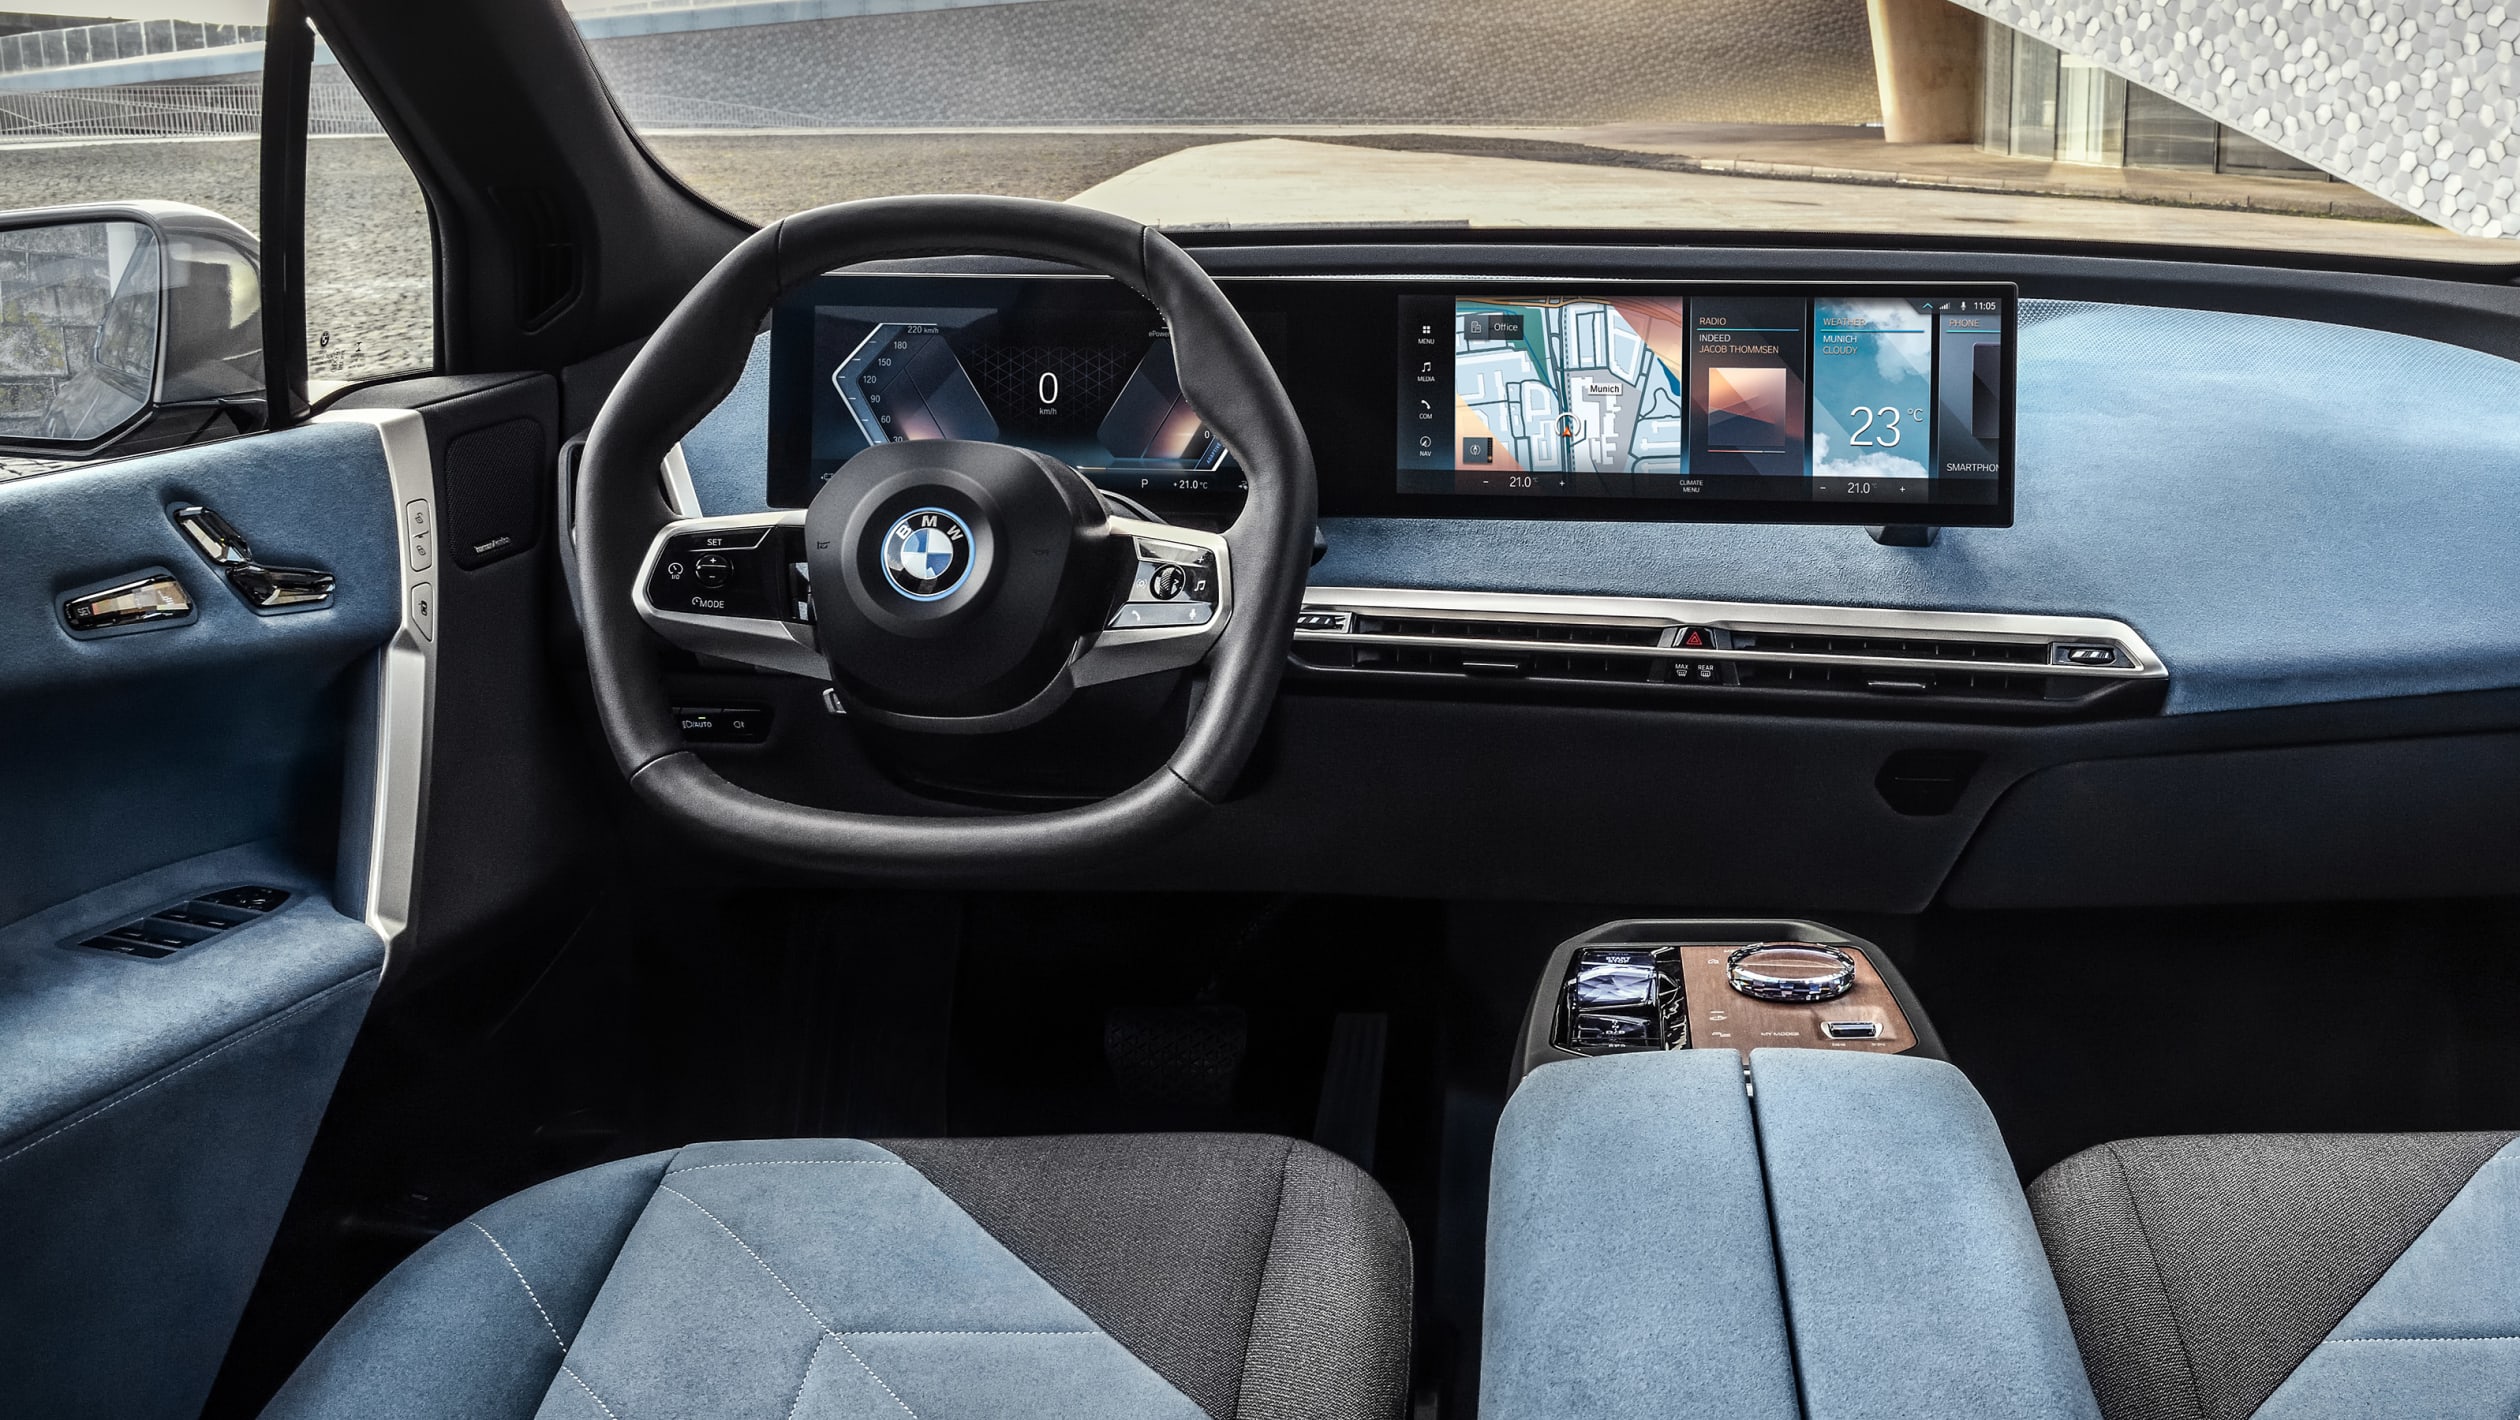 aria-label="New BMW iX electric SUV 2020 6"